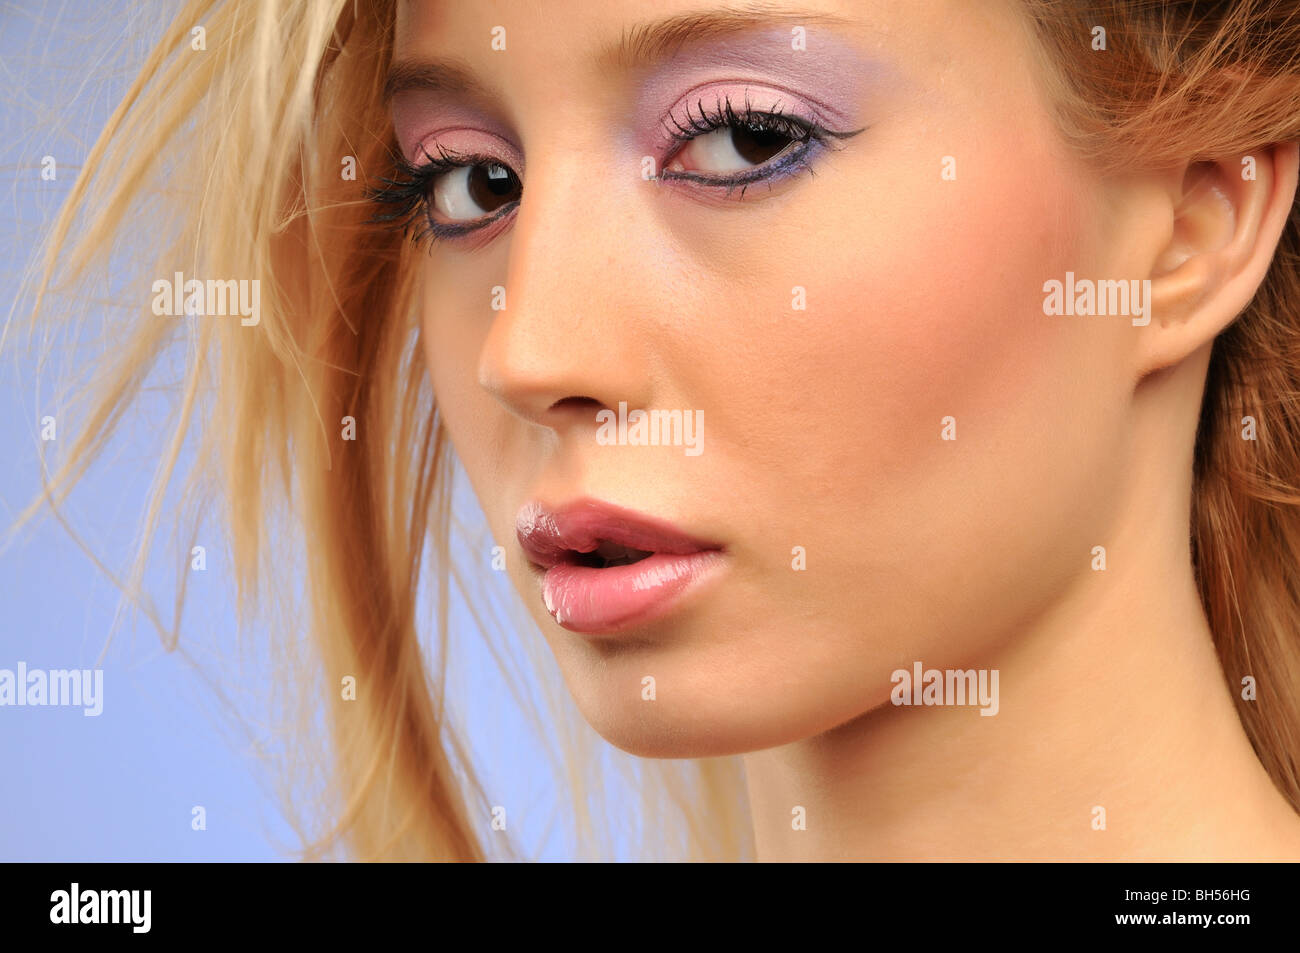 Closeup headshot of a young blonde woman Stock Photo